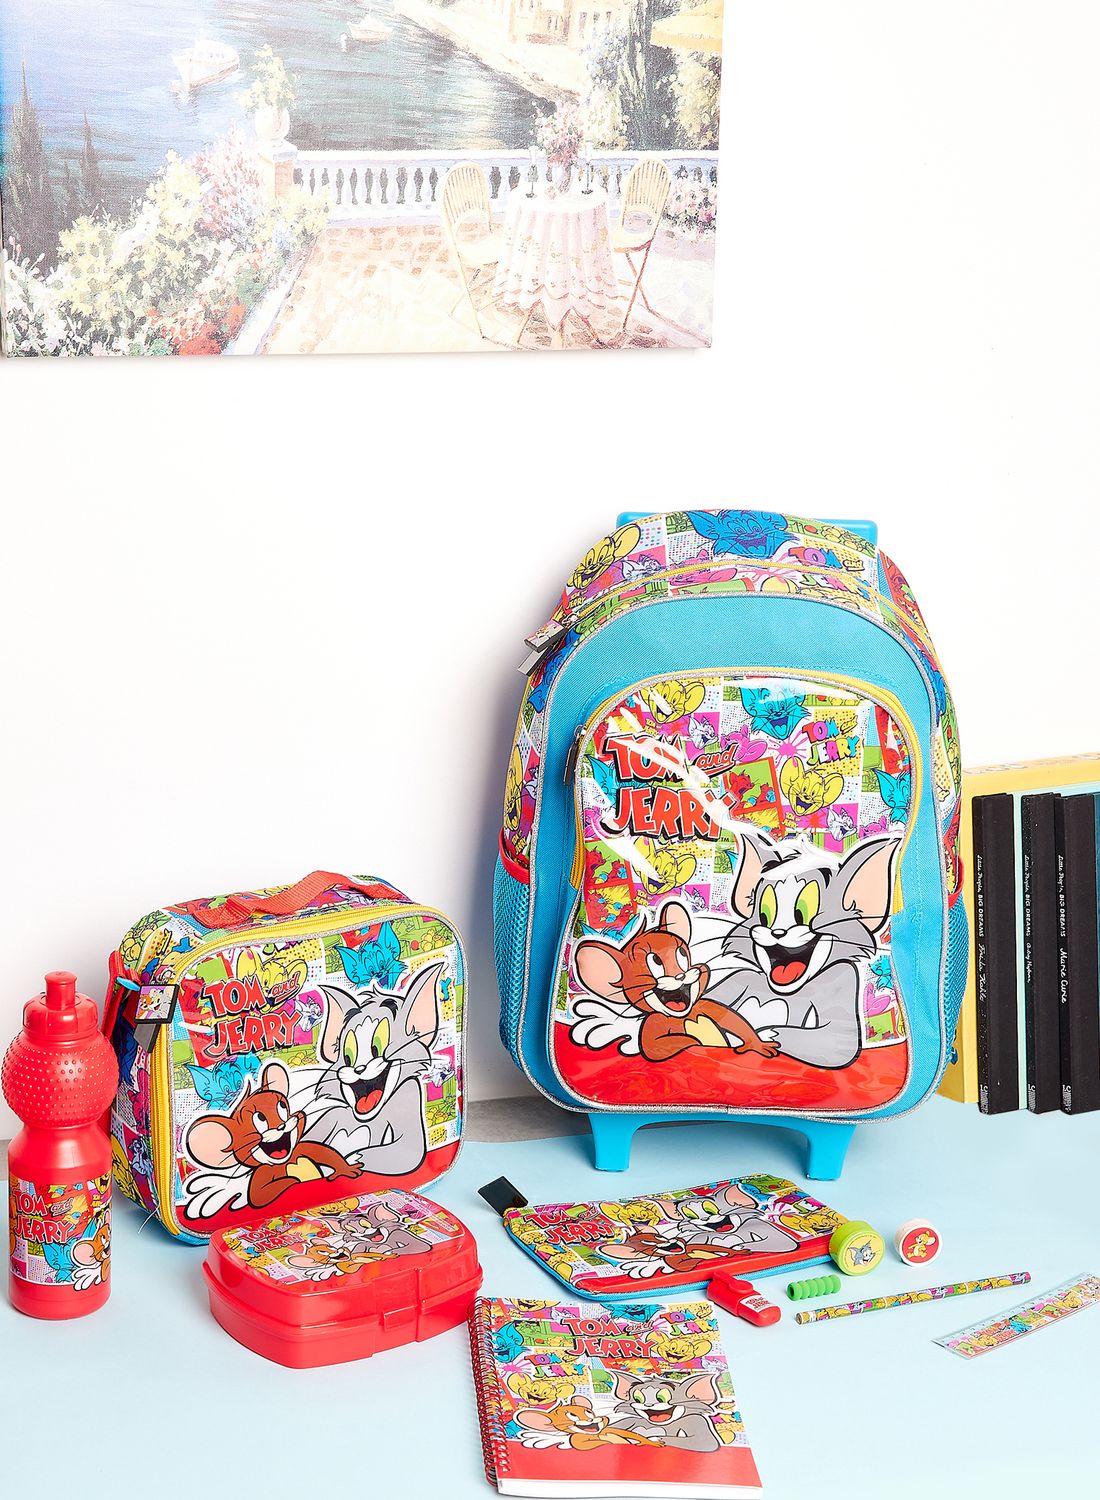 Tom & Jerry Triangle Bag (Jelly) : Amazon.com.au: Toys & Games